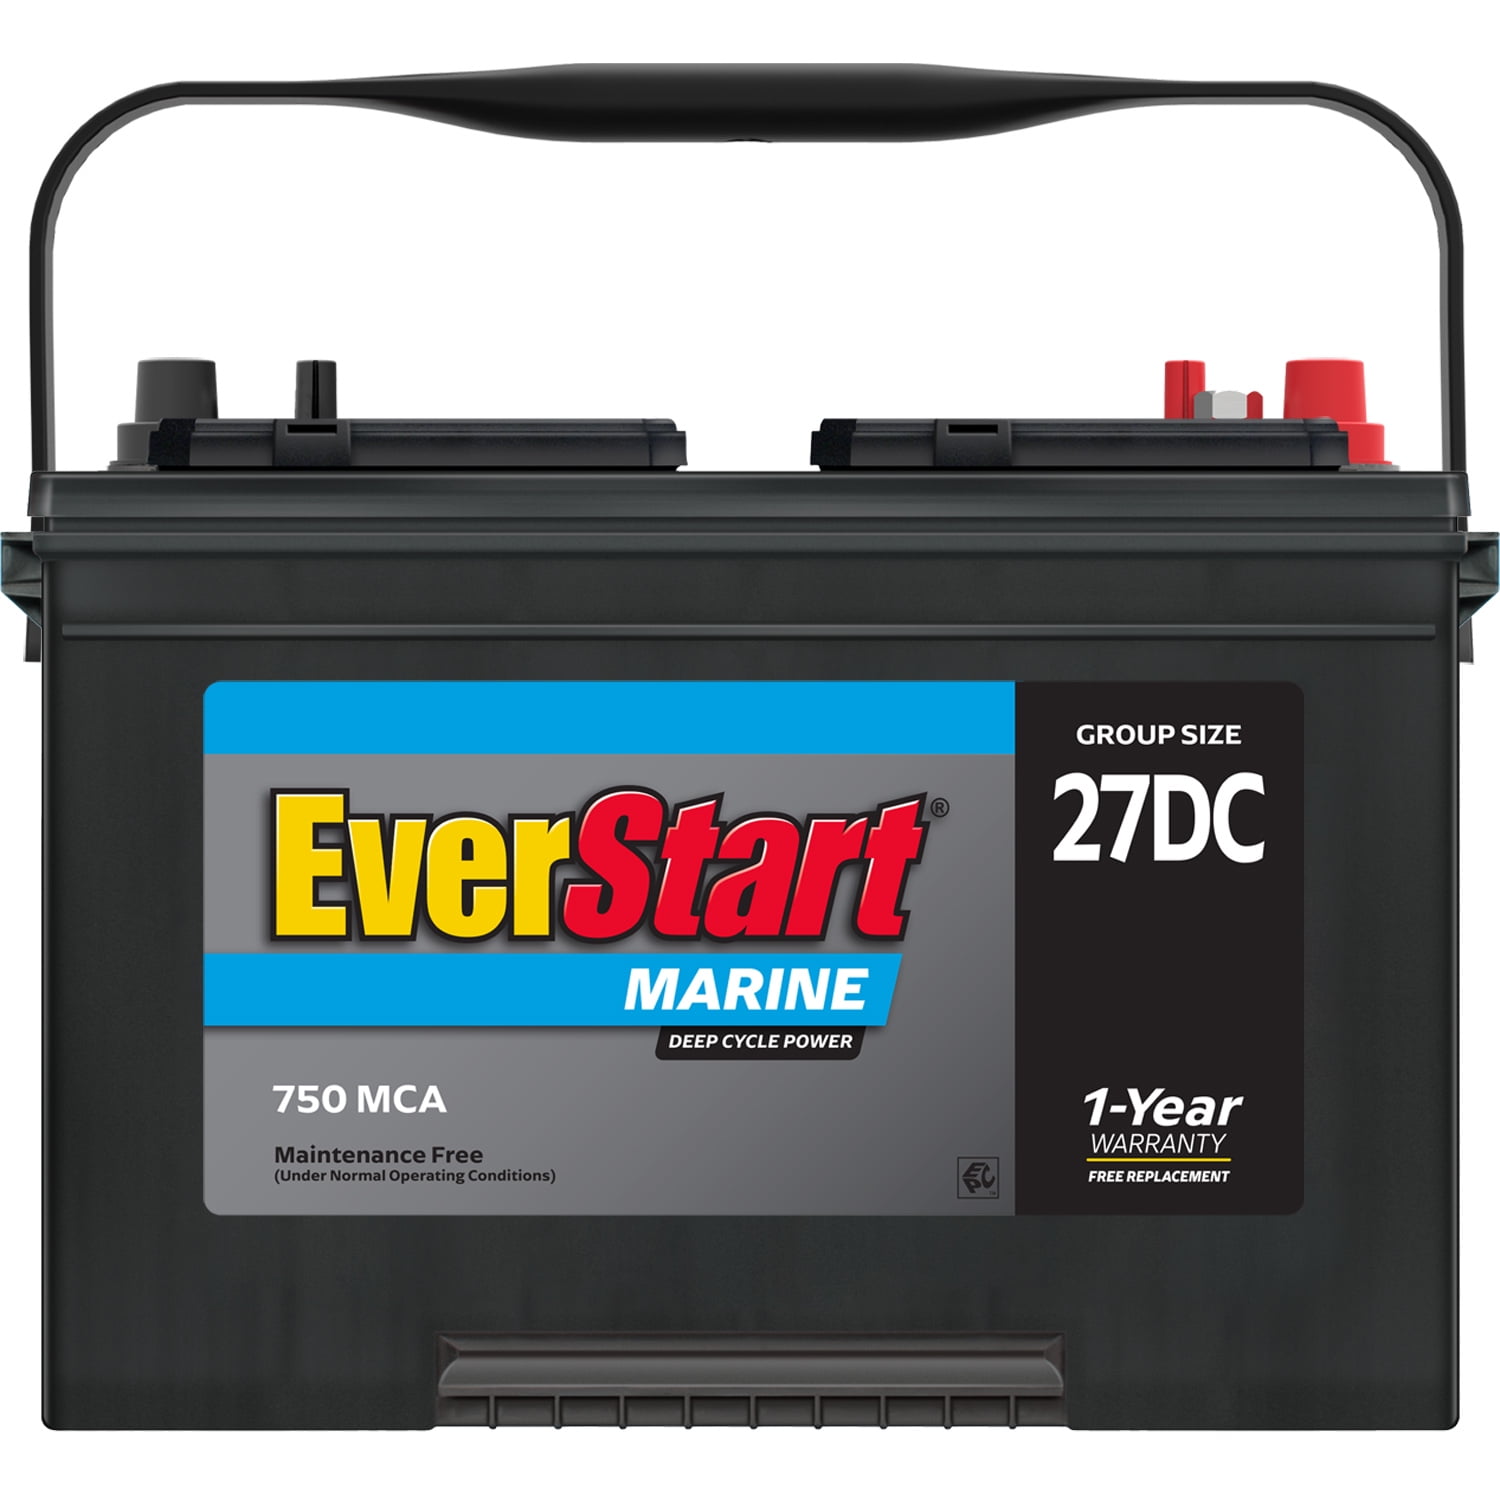 EverStart Lead Acid & RV Deep Cycle Battery, Group Size 27DC (12 Volt/750 MCA) - Walmart.com